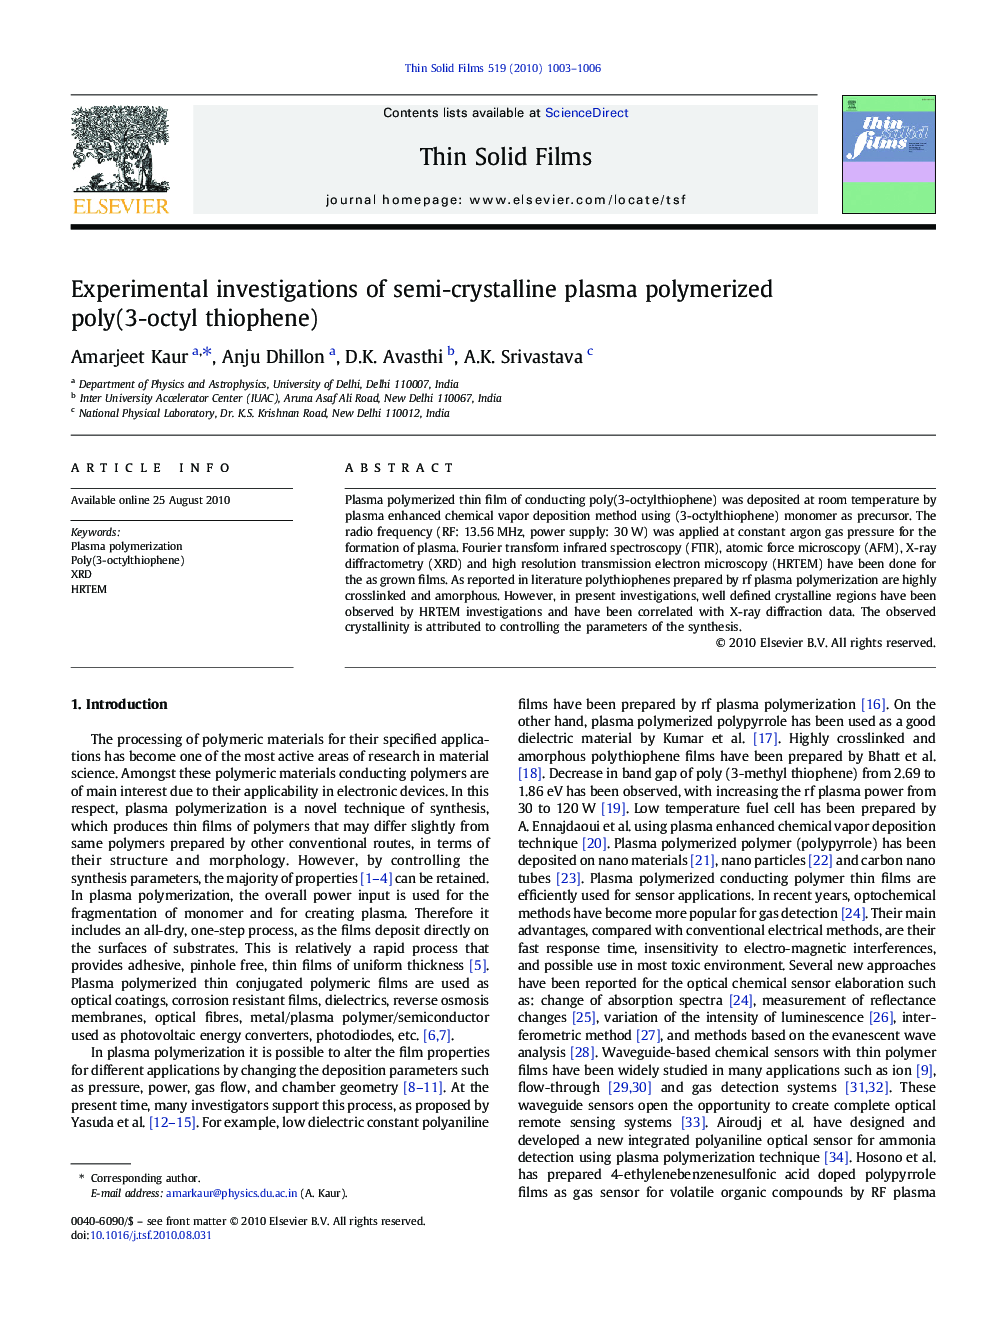 Experimental investigations of semi-crystalline plasma polymerized poly(3-octyl thiophene)